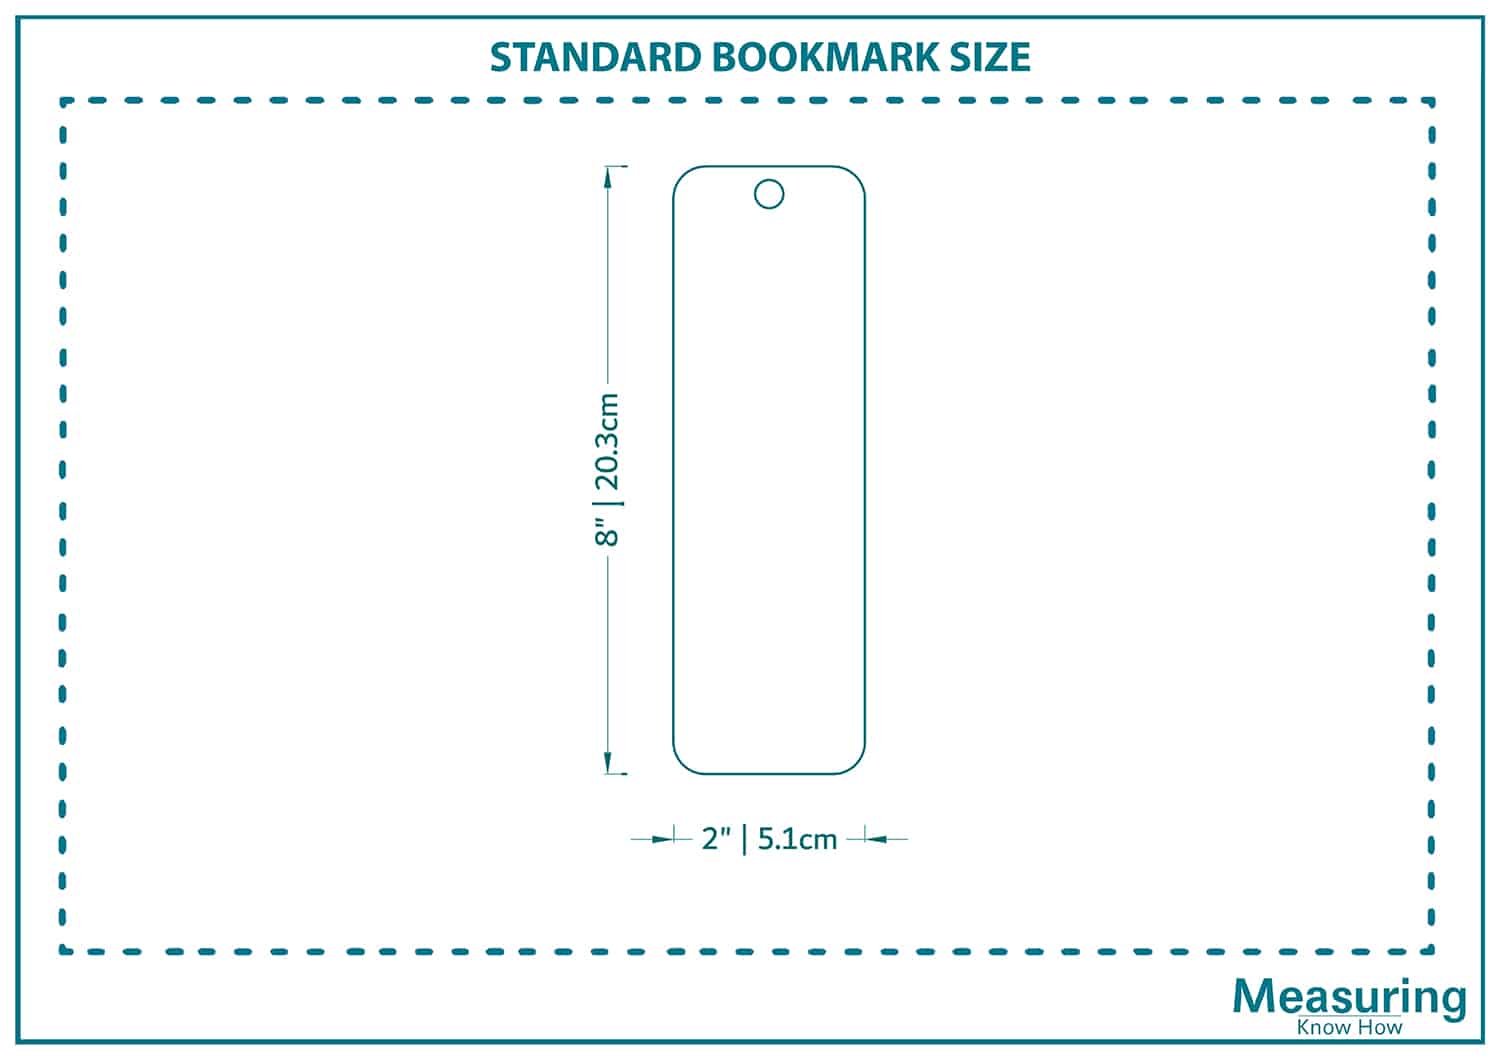 Standard bookmark size